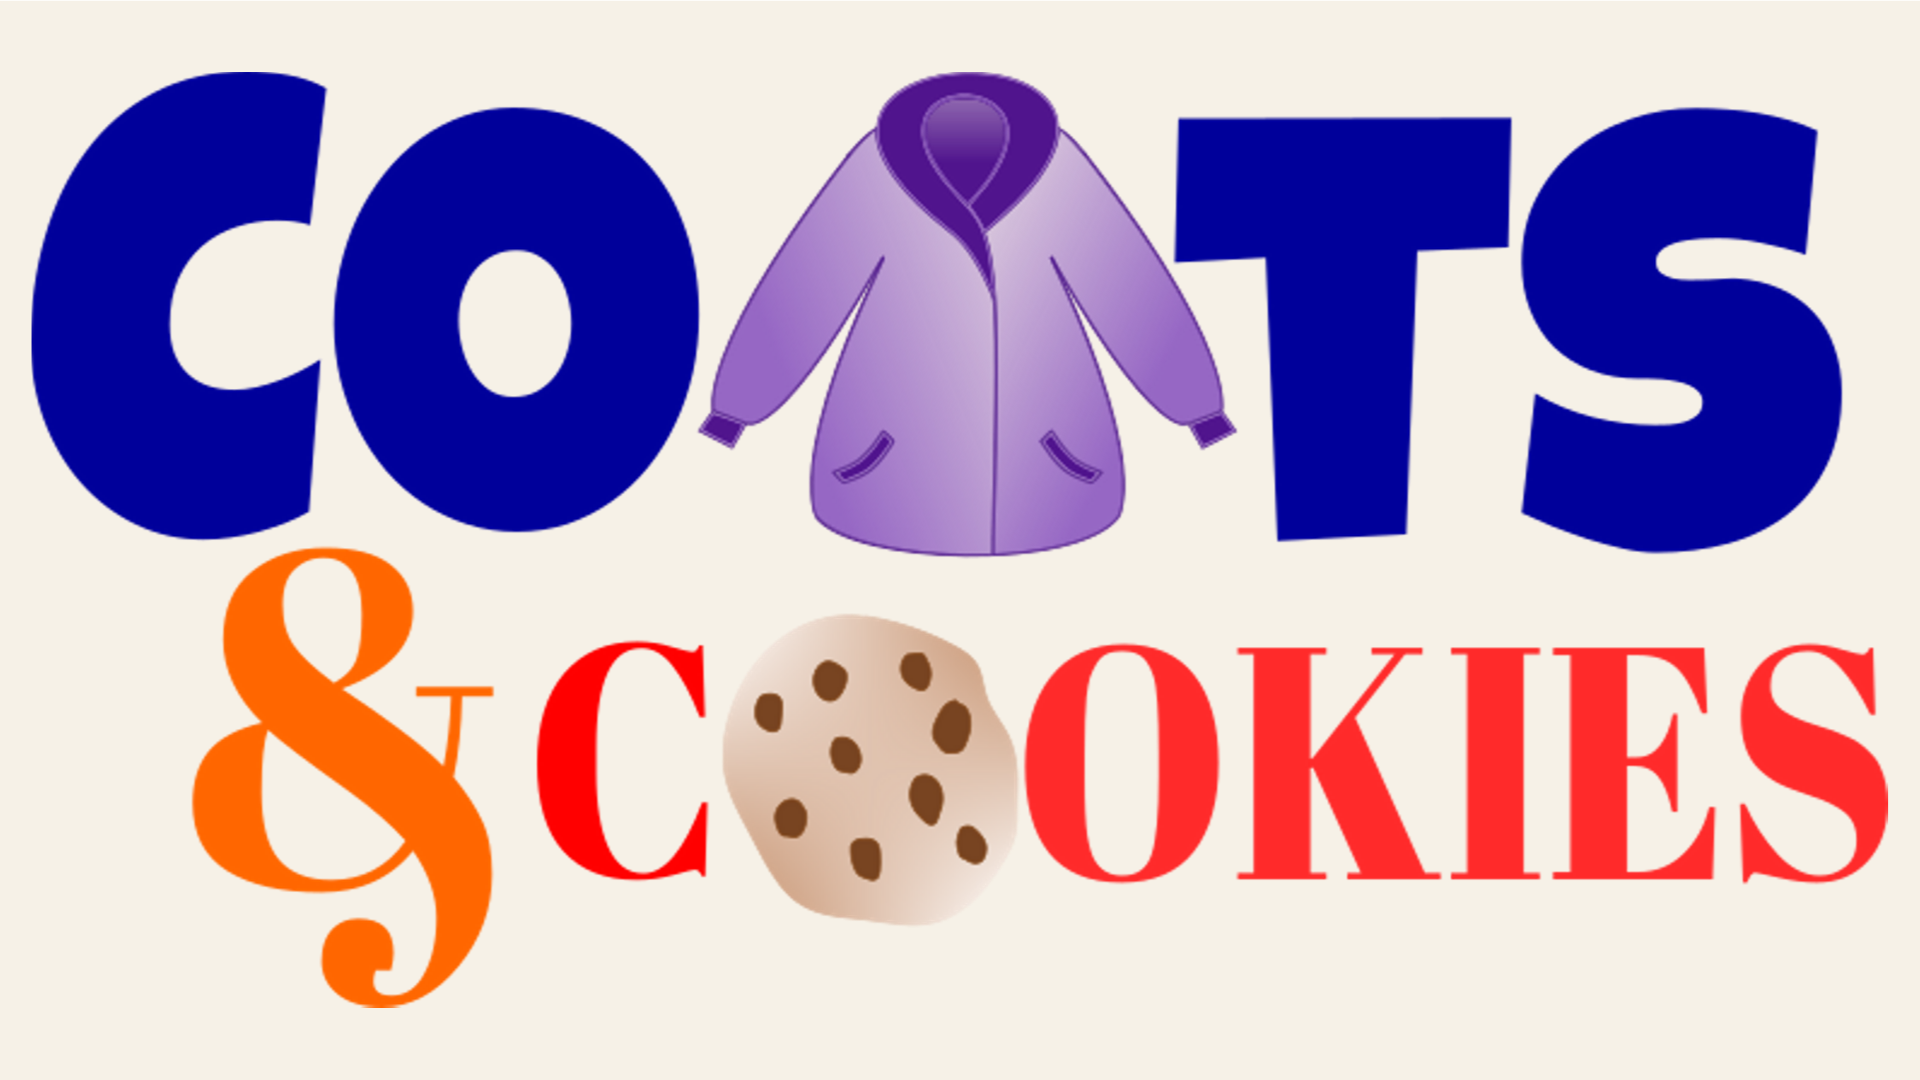 Coats and Cookies logo image